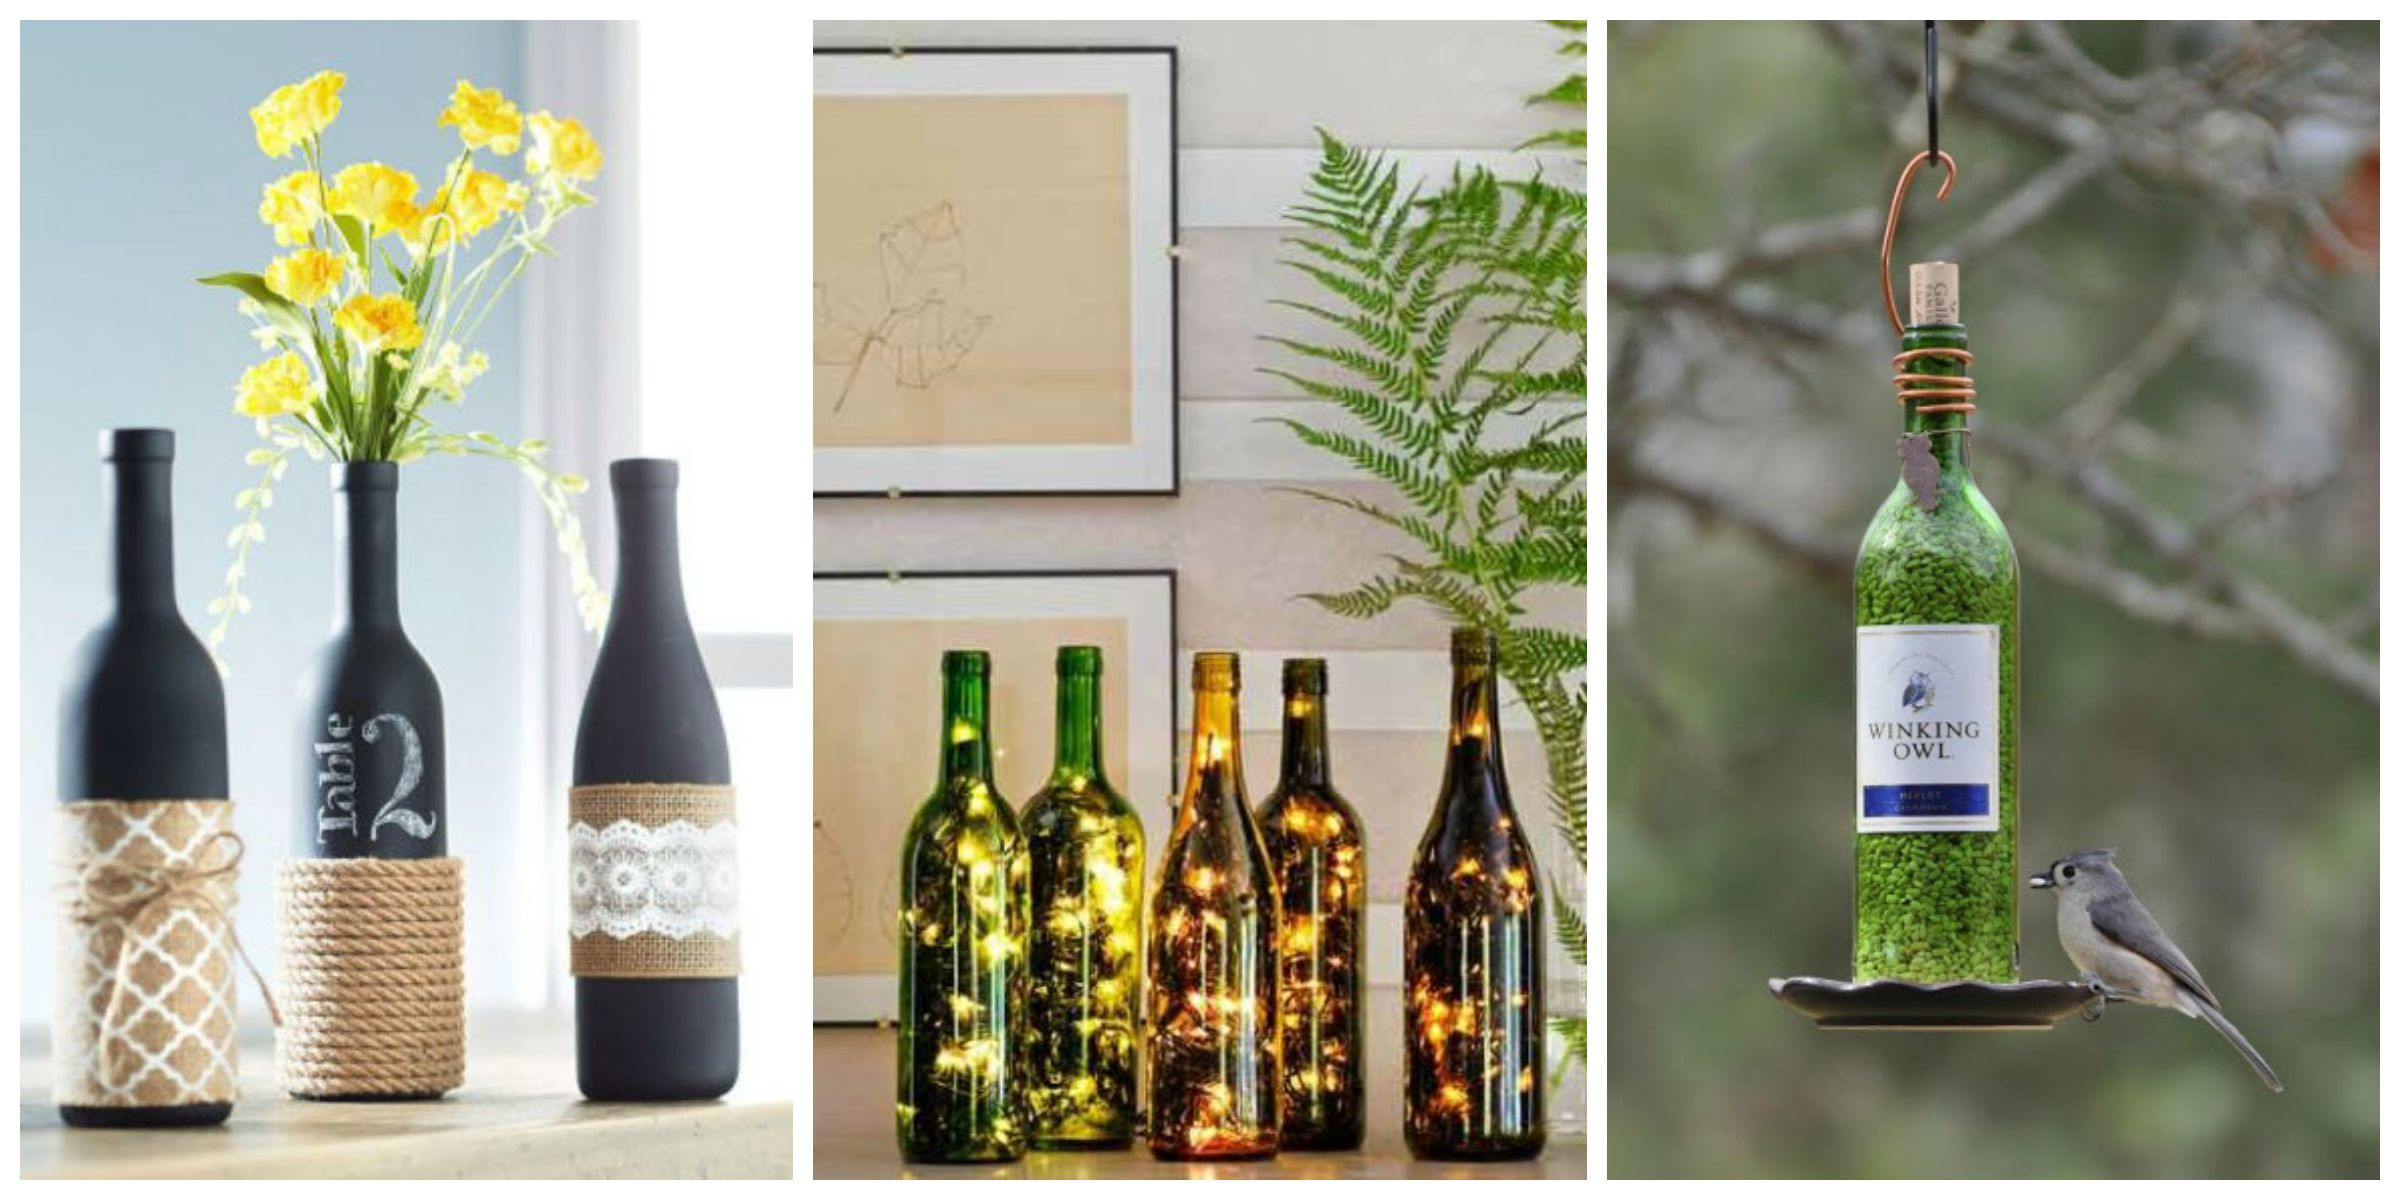 Best ideas about DIY Wine Bottle Crafts
. Save or Pin 24 DIY Wine Bottle Crafts Empty Wine Bottle Decoration Ideas Now.